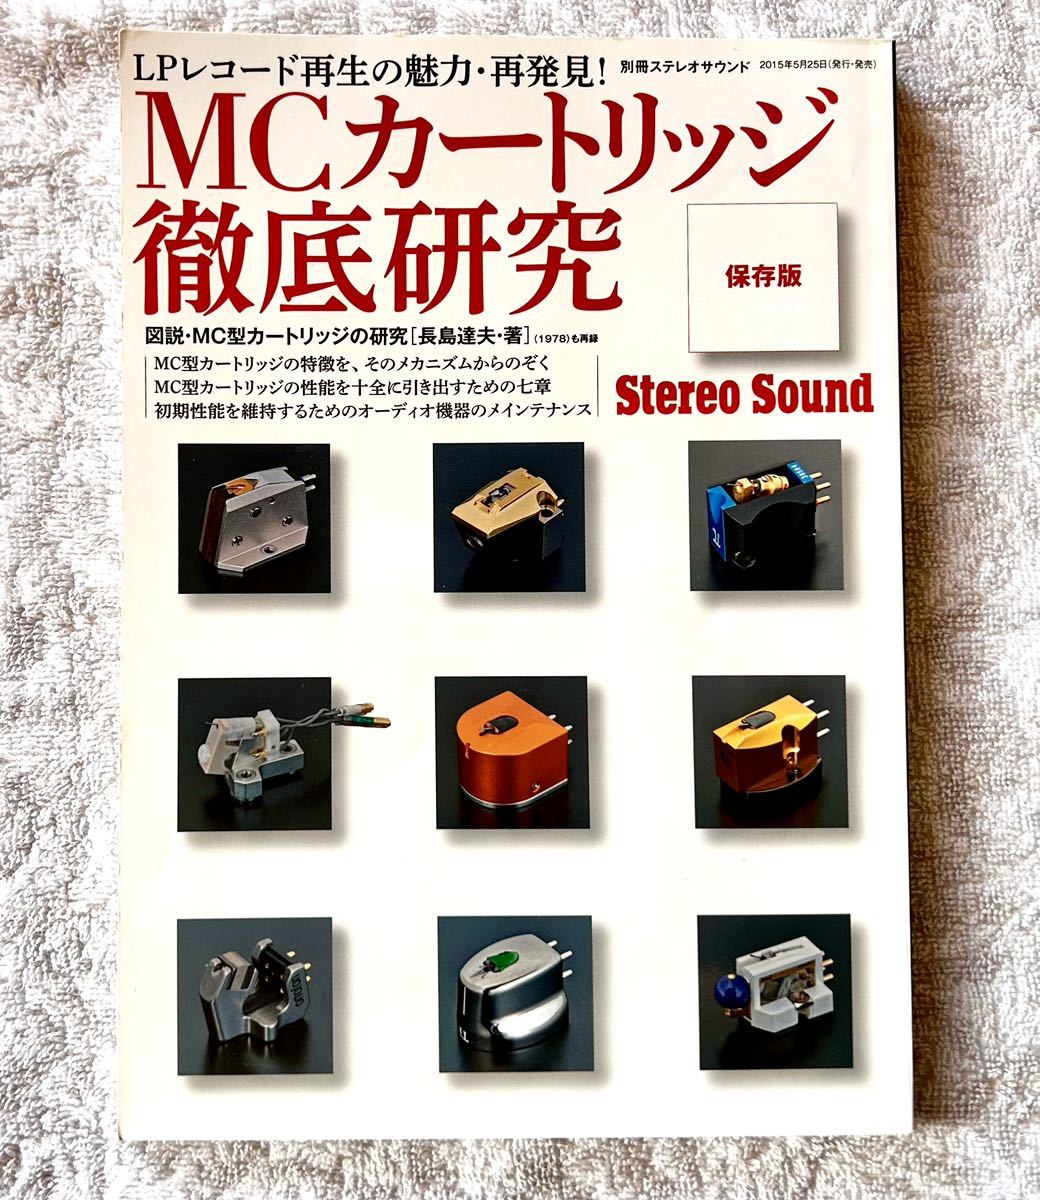 MCカートリッジ徹底研究 LPレコード再生の魅力・再発見！ 別冊 ステレオサウンド ムック本 オーディオ STBREO SOUND カートリッジ 保存版の画像1